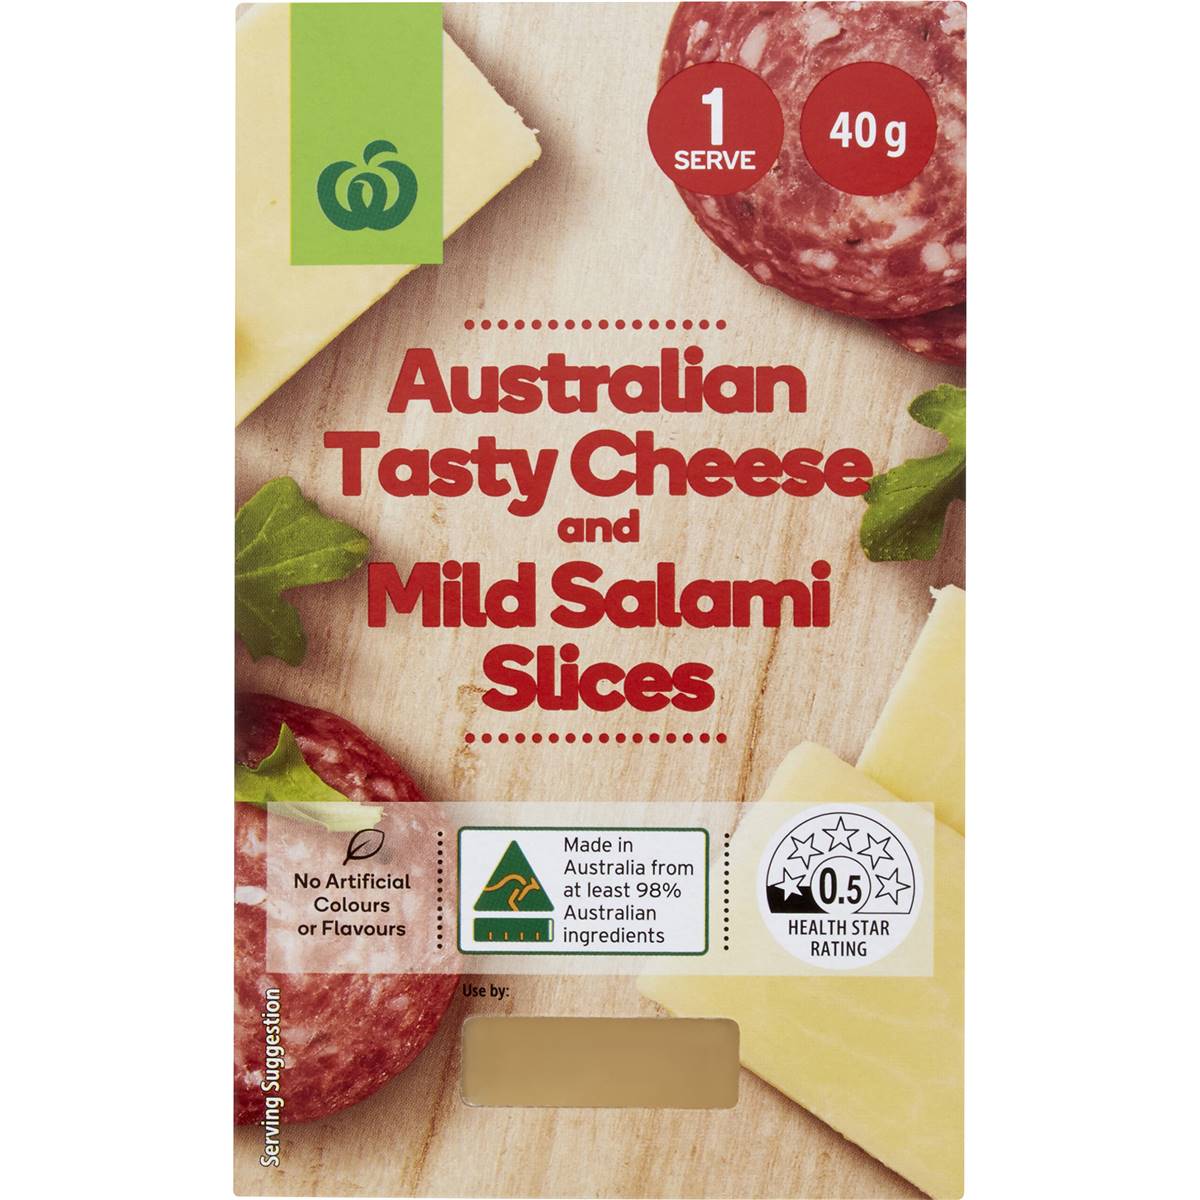 Calories in Woolworths Australian Tasty Cheese & Mild Salami Slices